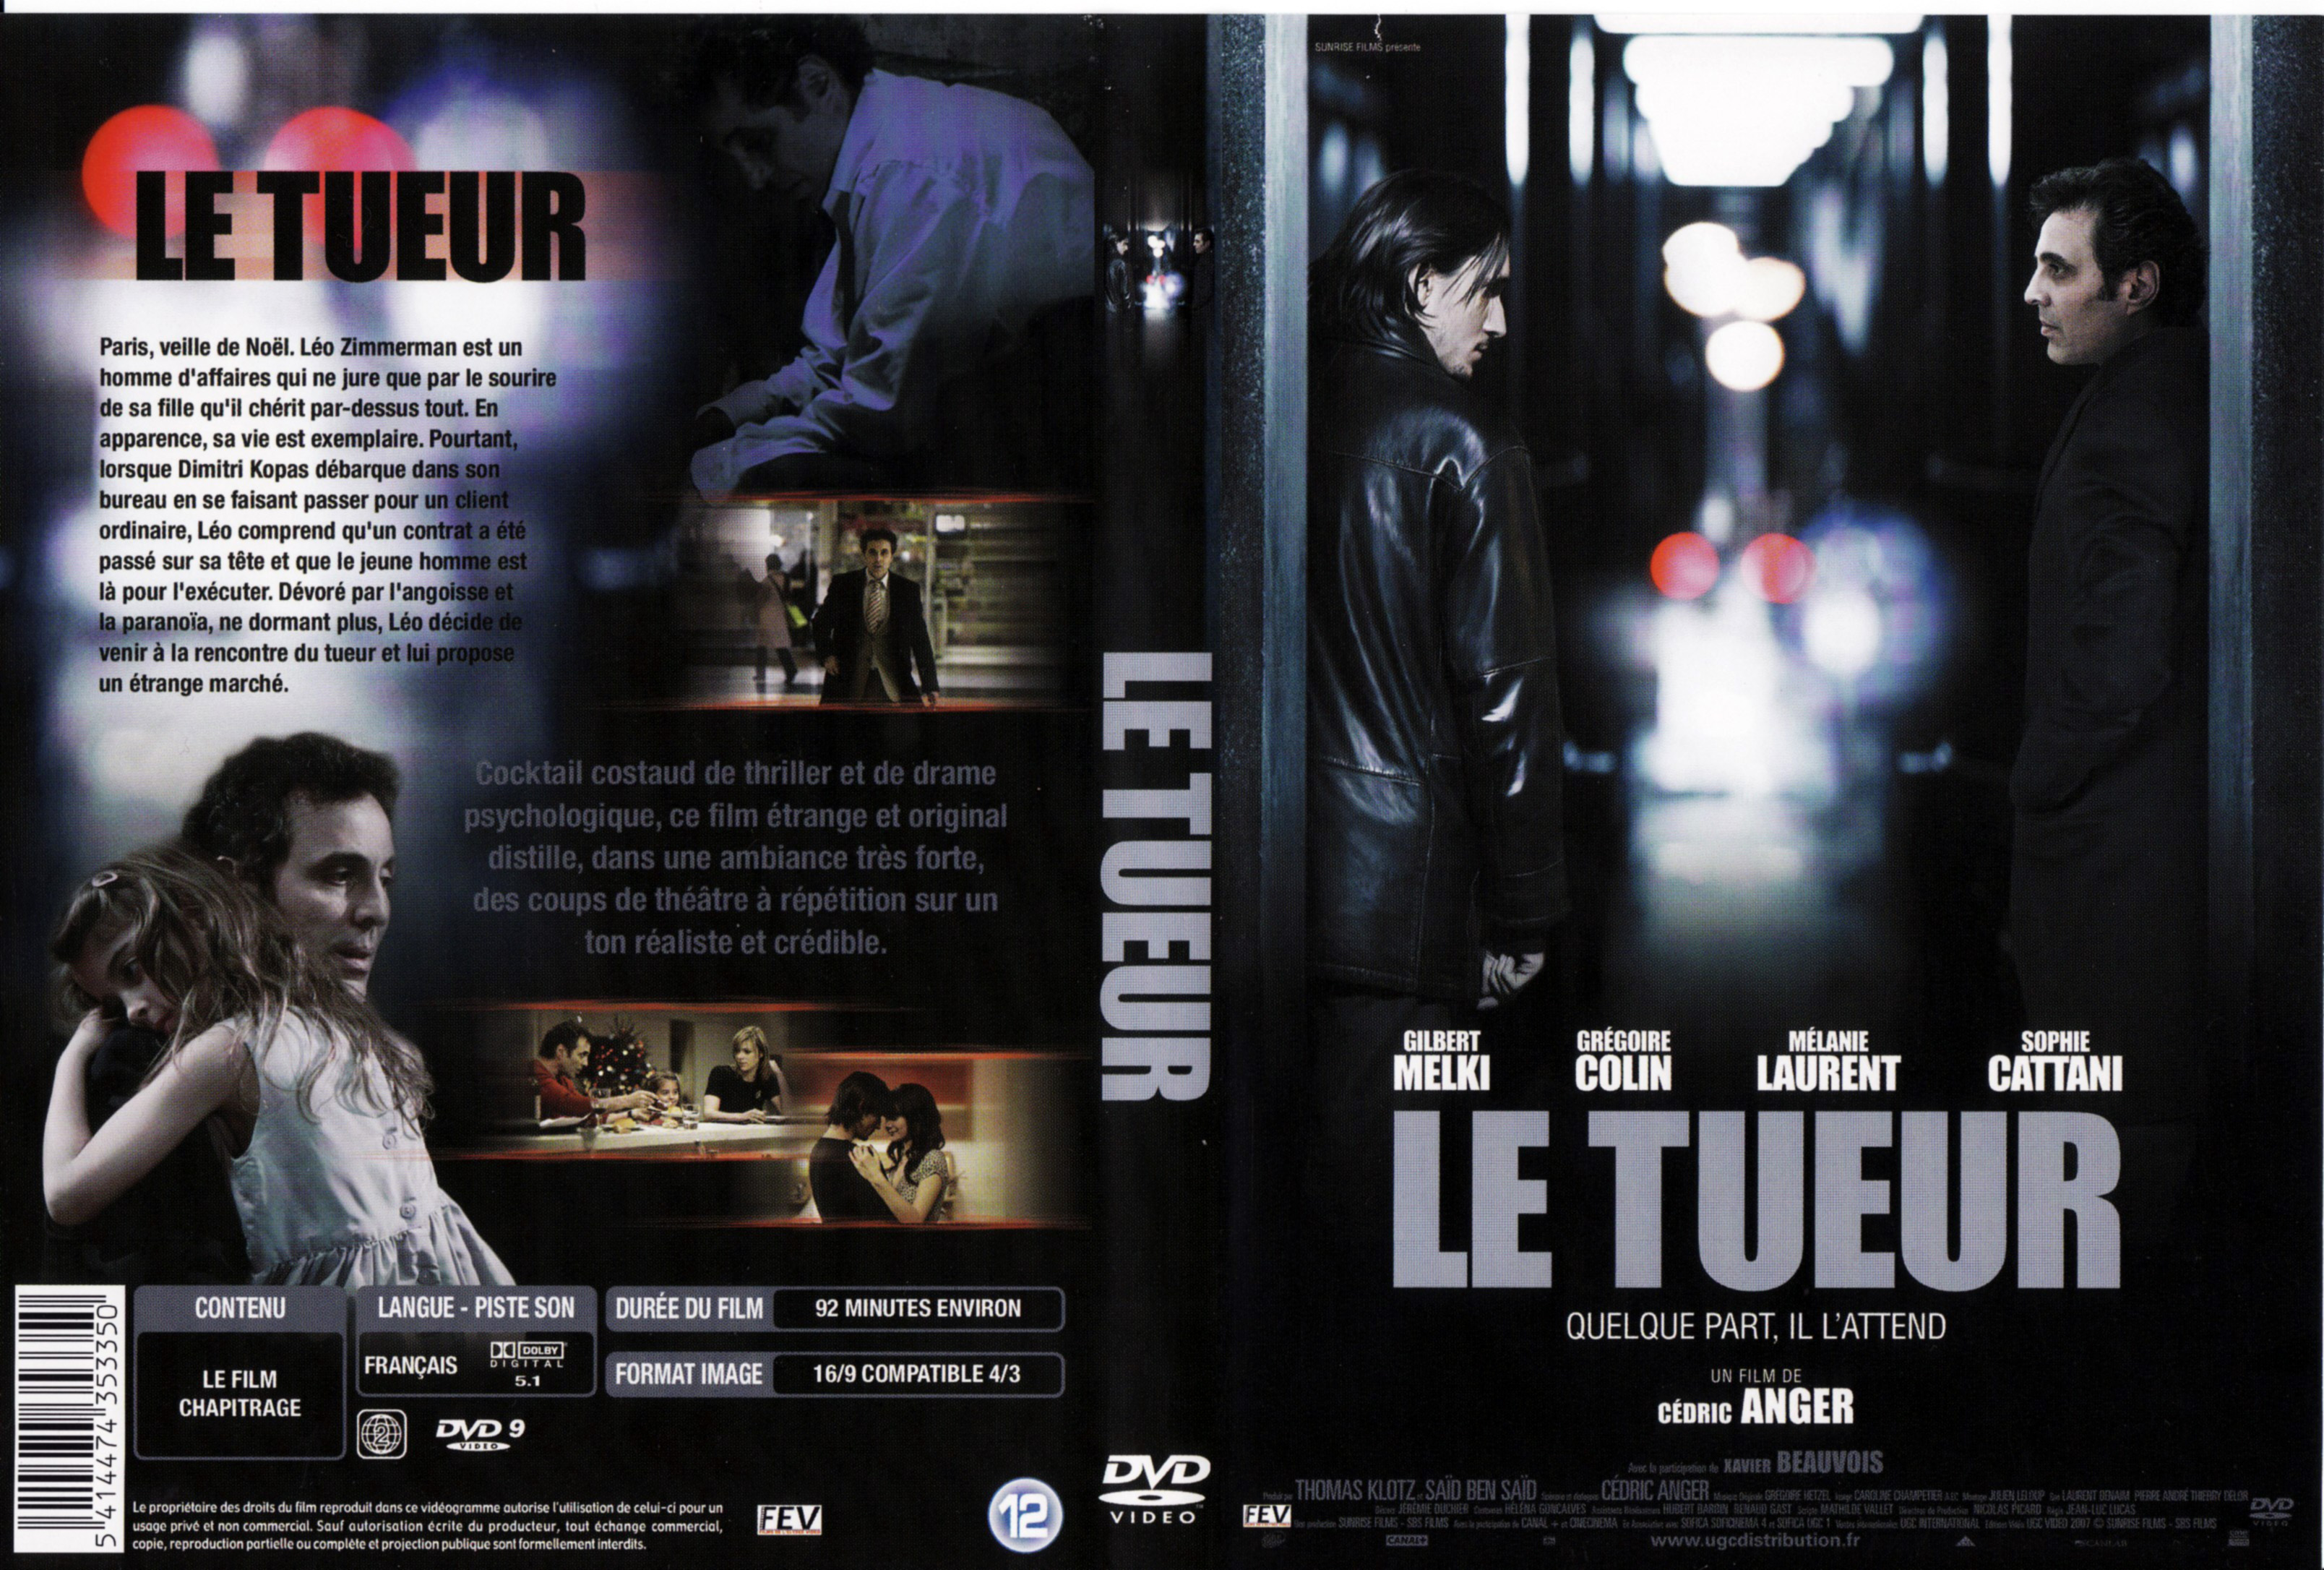 Jaquette DVD Le tueur (Gilbert Melki) v2